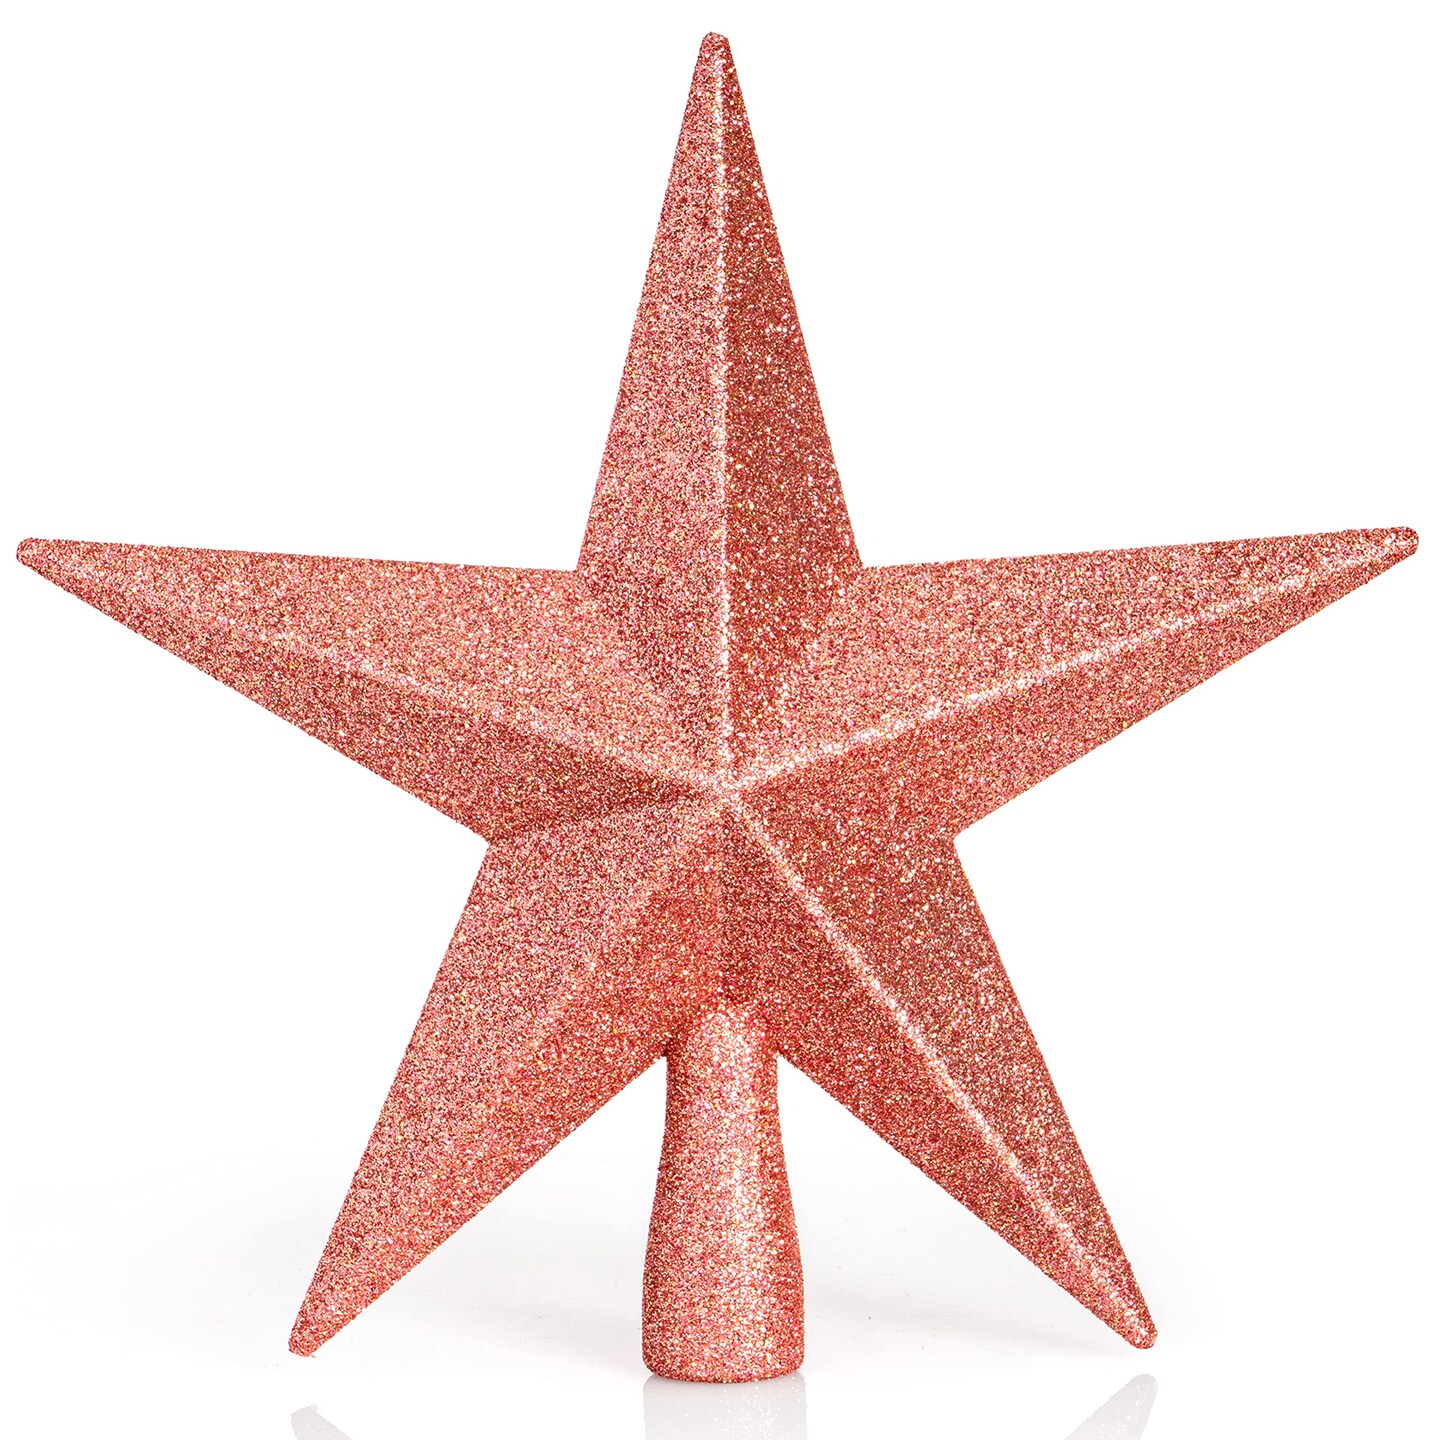 Ornativity Glitter Star Tree Topper - Christmas Rose Gold Decorative Holiday Bethlehem Star Ornament